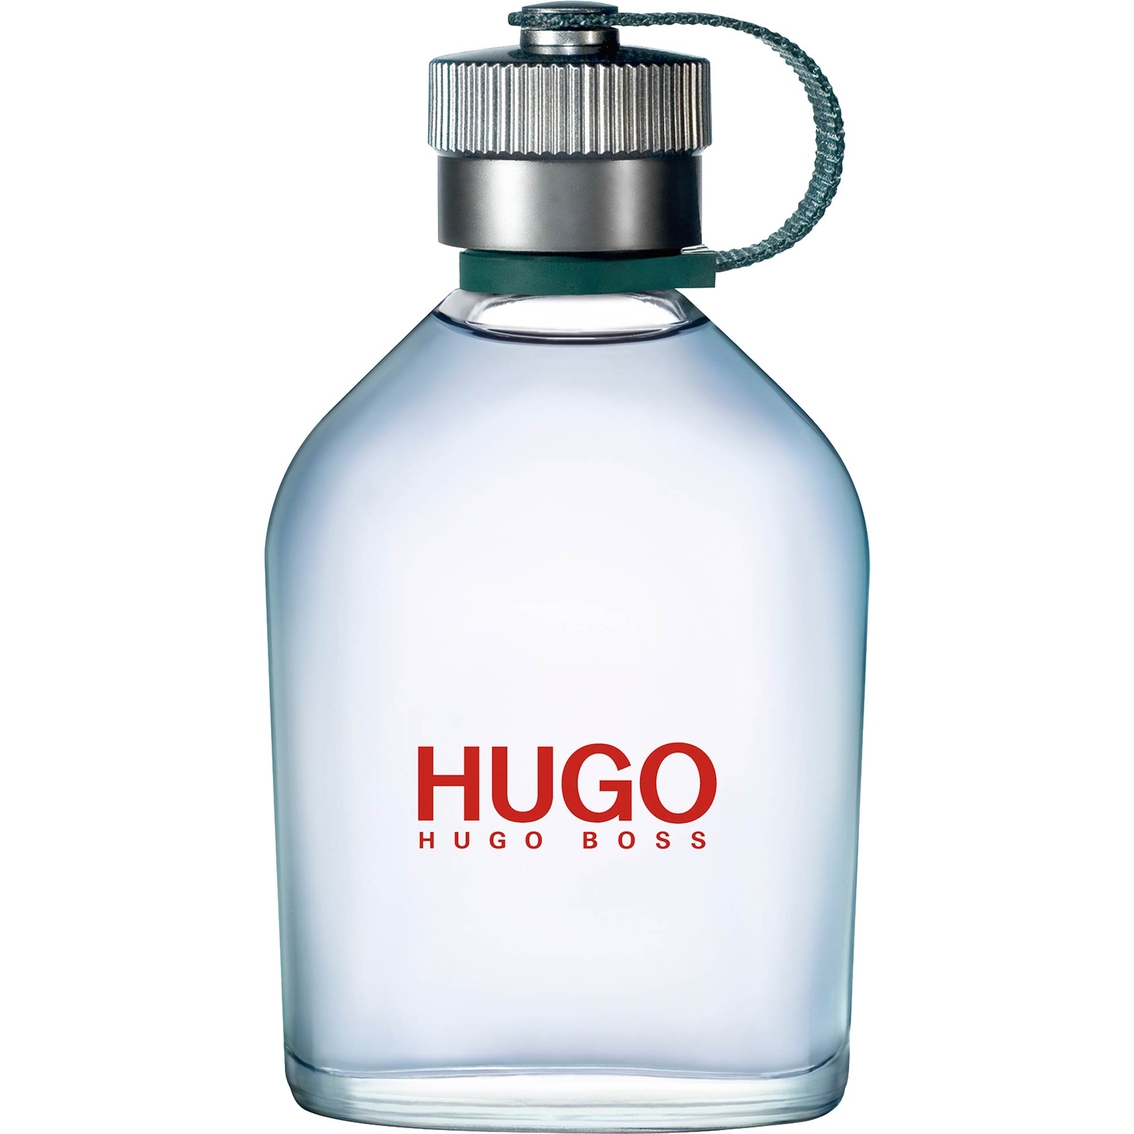 Hugo Boss Hugo Eau De Toilette Spray | Fragrances | Beauty & Health ...